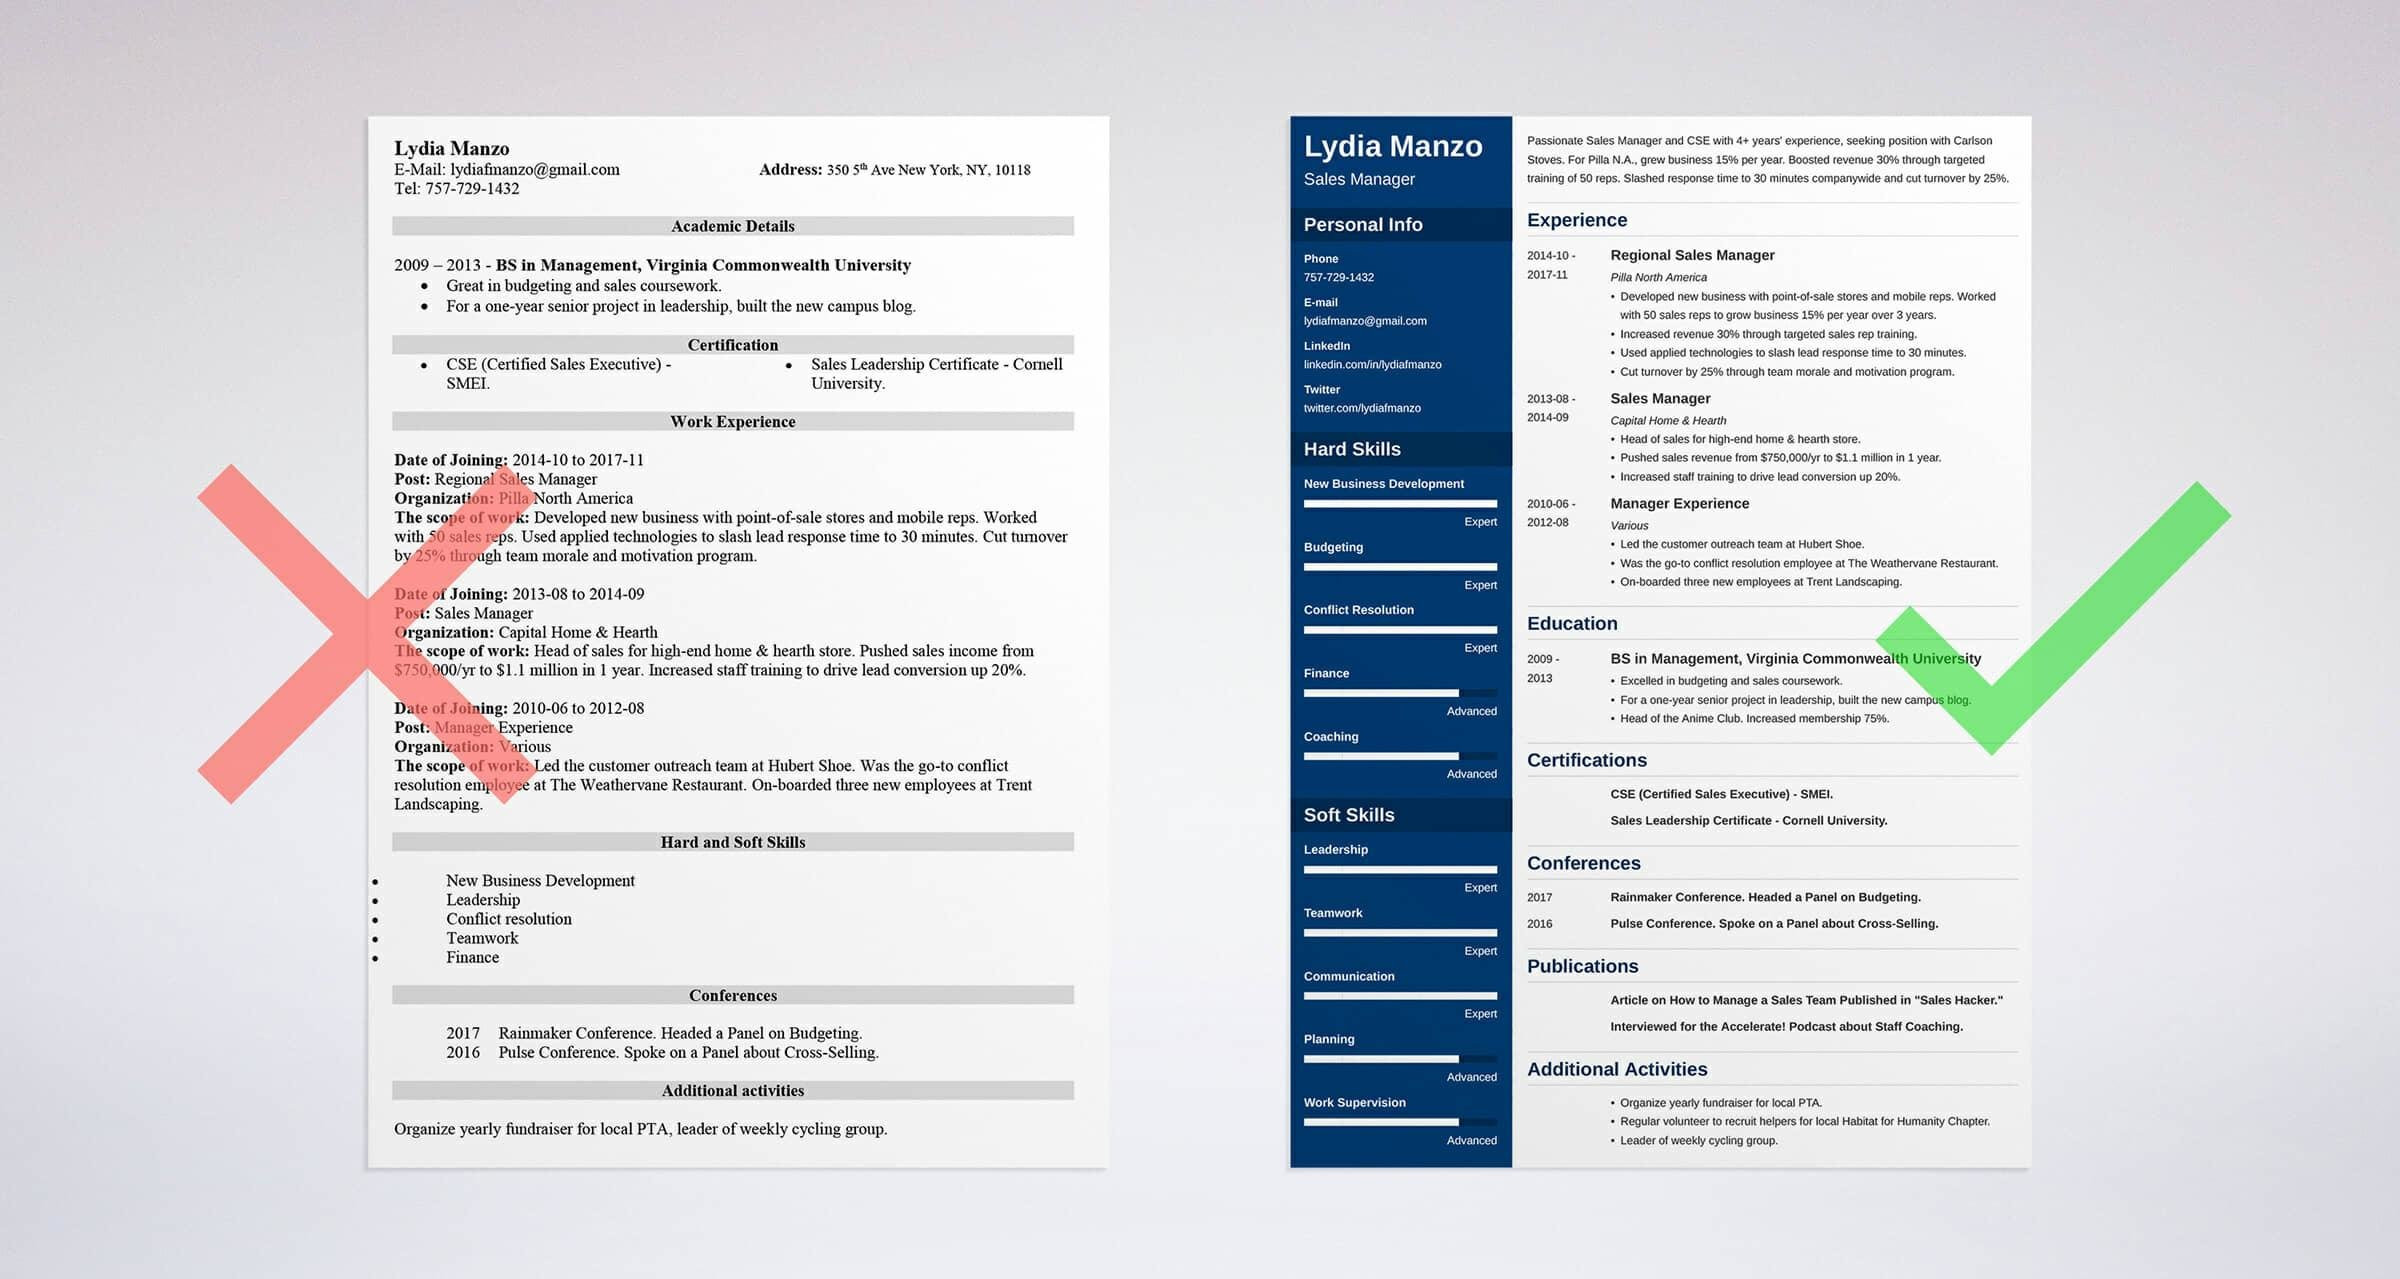 Sample Resume for Entry Level Management Manager Resume Examples [skills, Job Description]